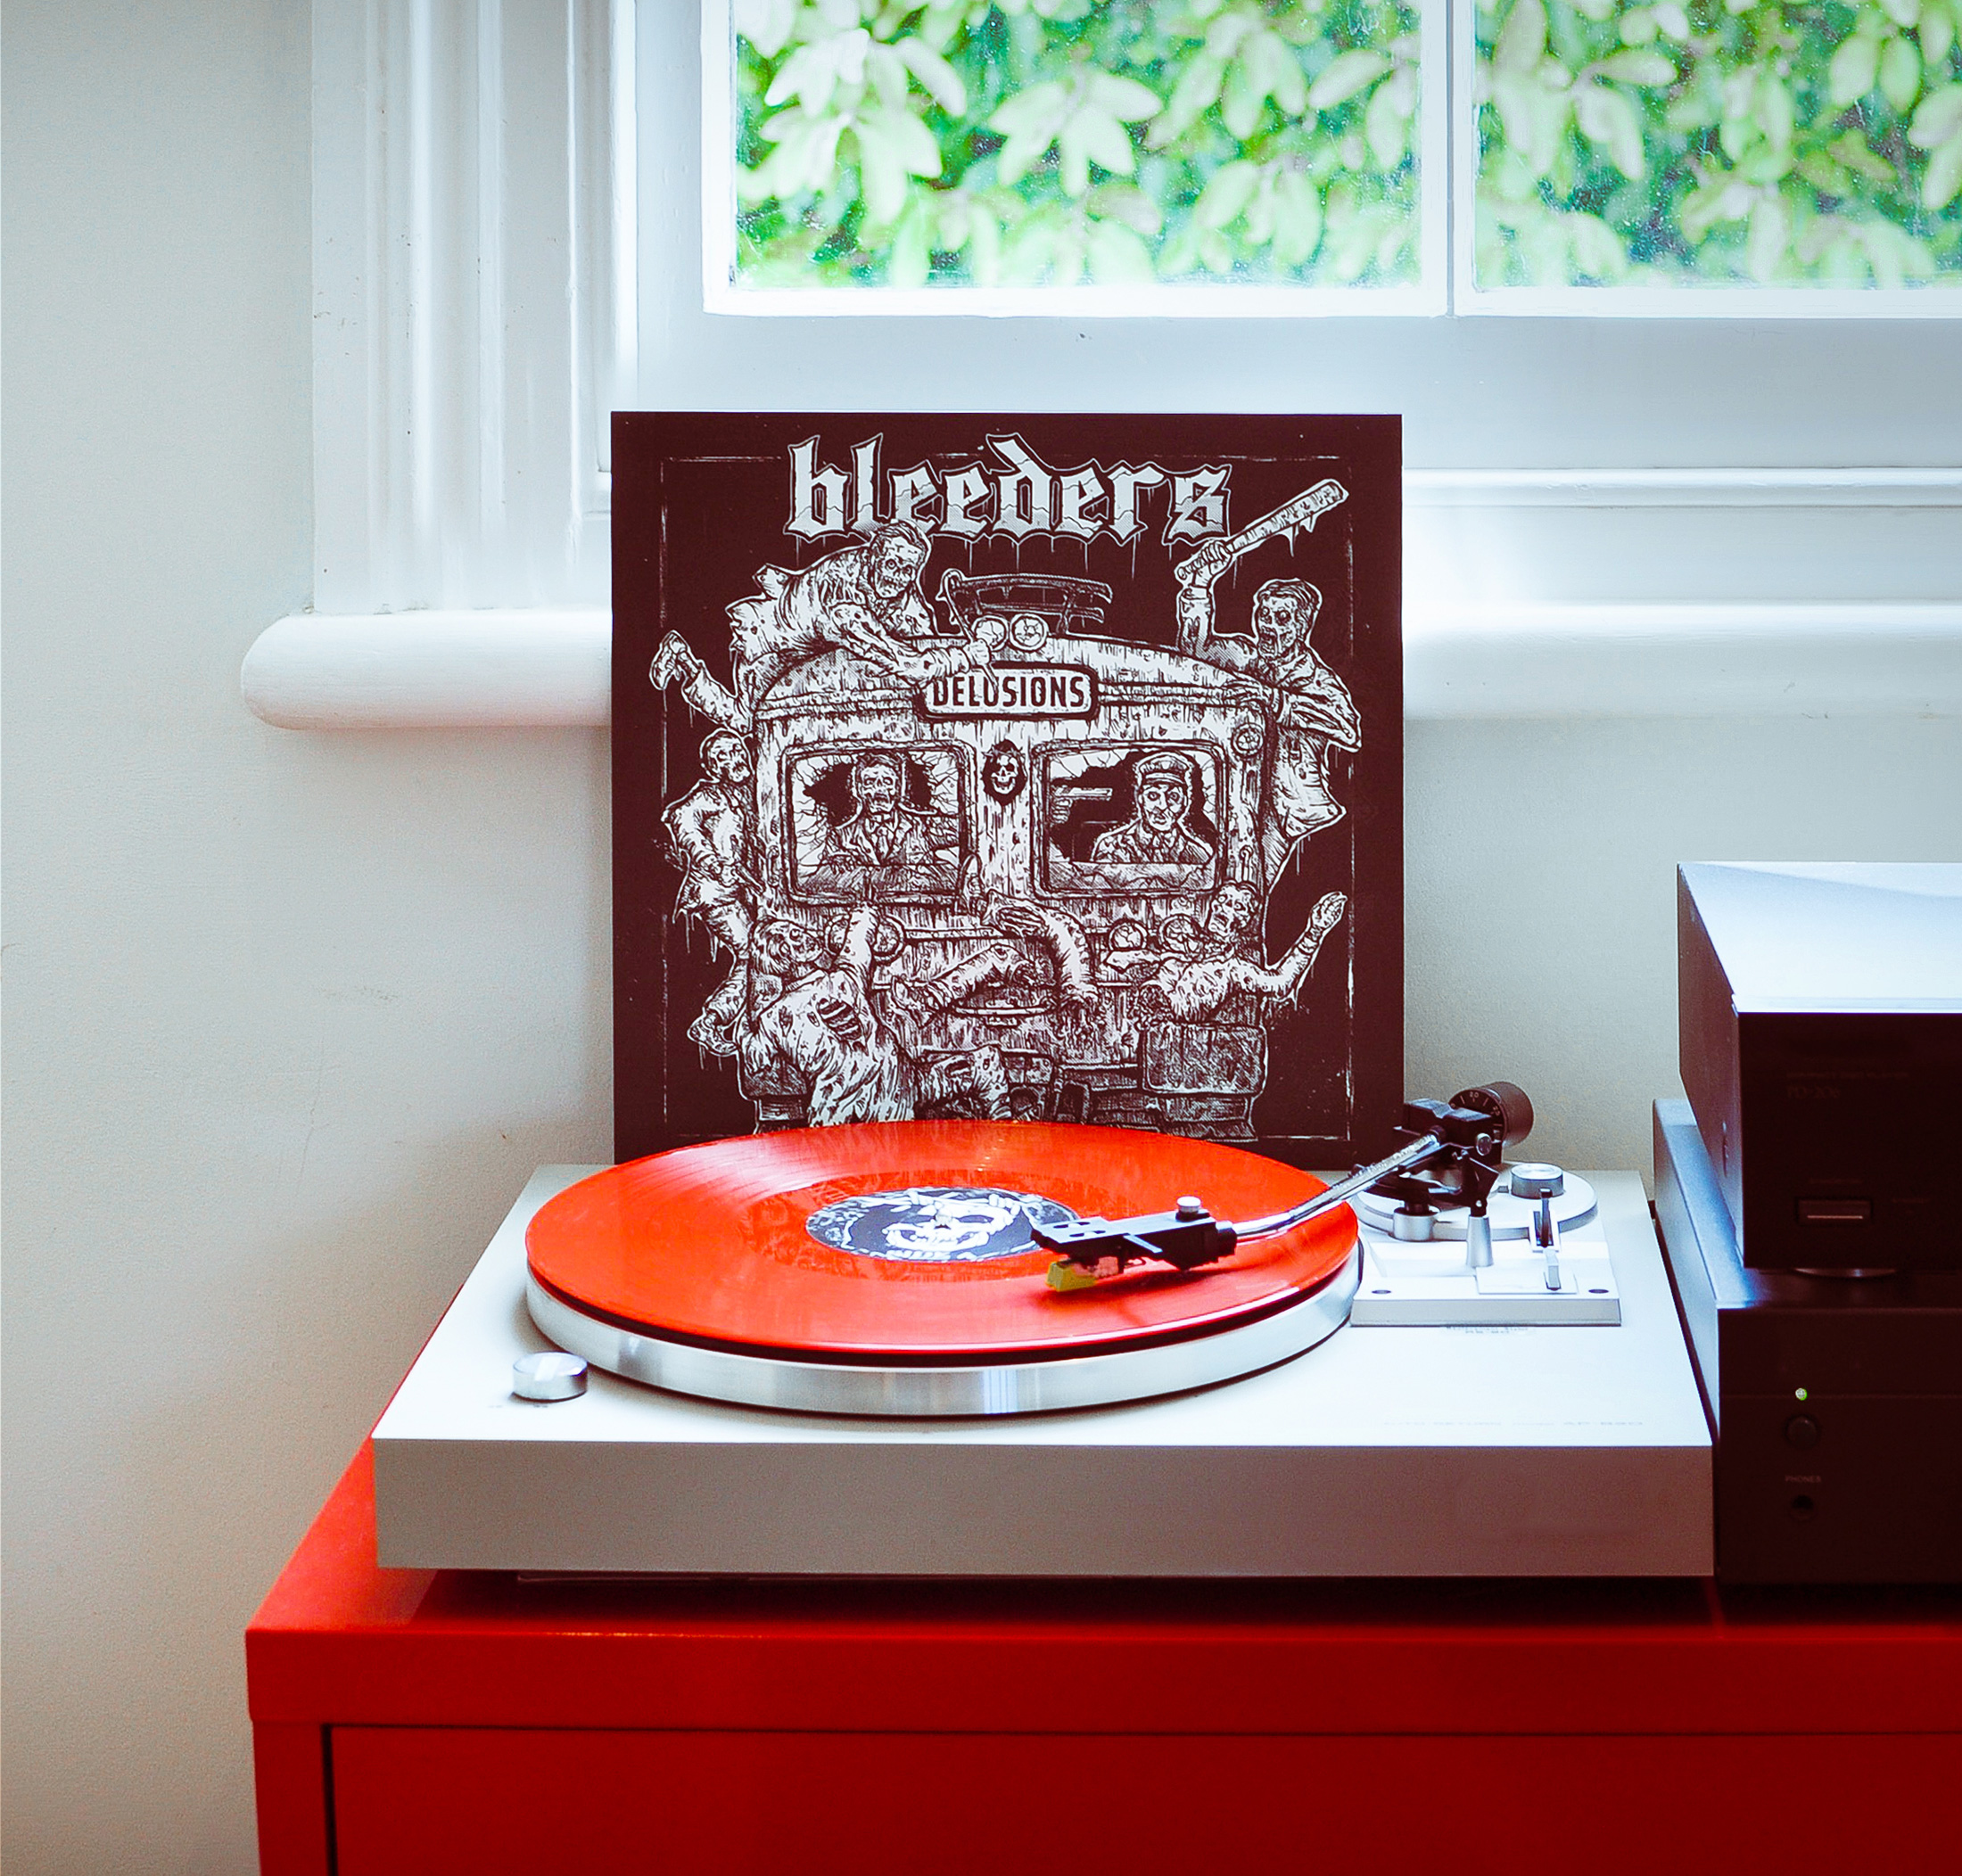 Bleeders - Punk vinyl album artwork design